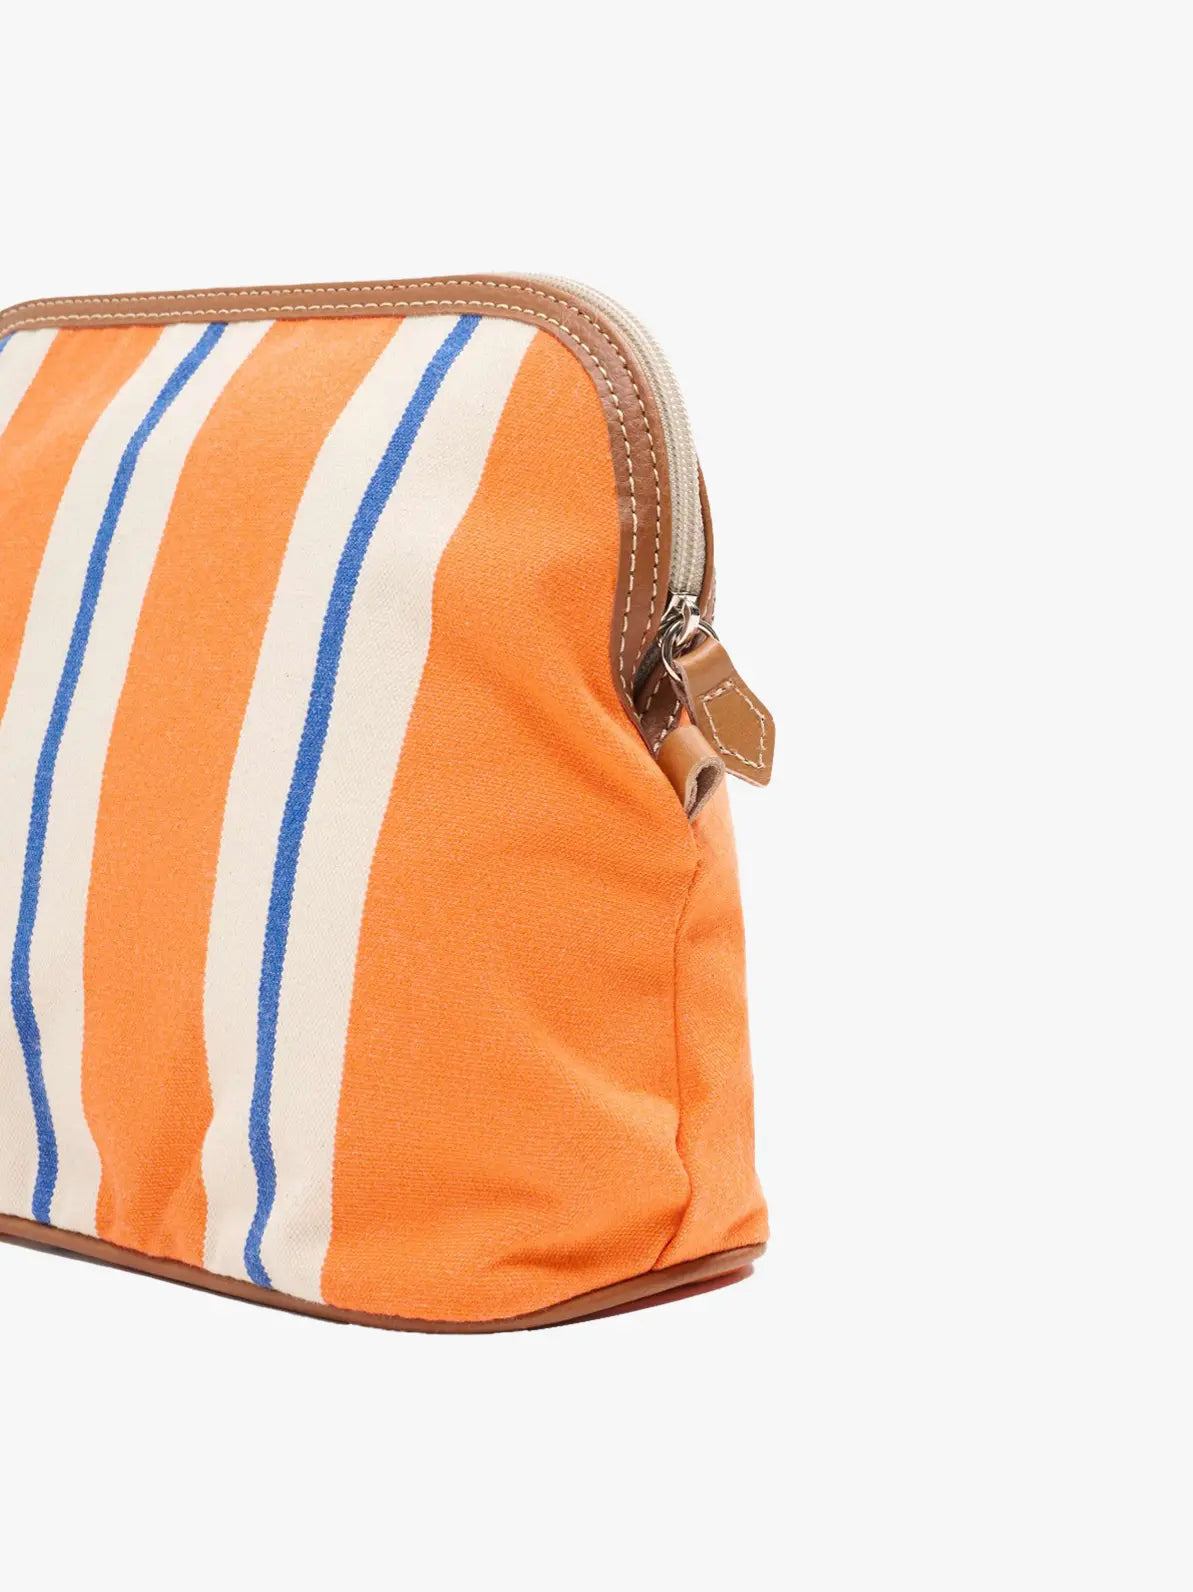 Amalfi Striped Wash Bag